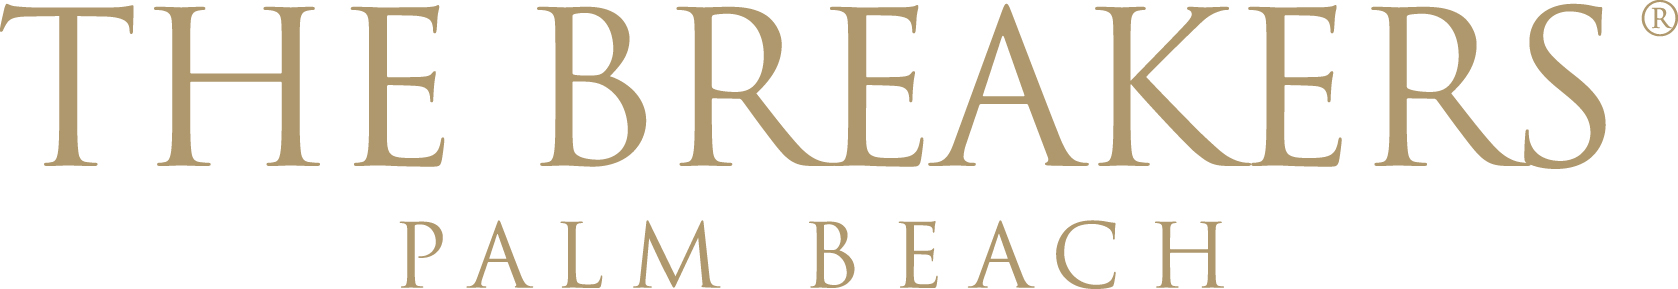 The Breakers Logo